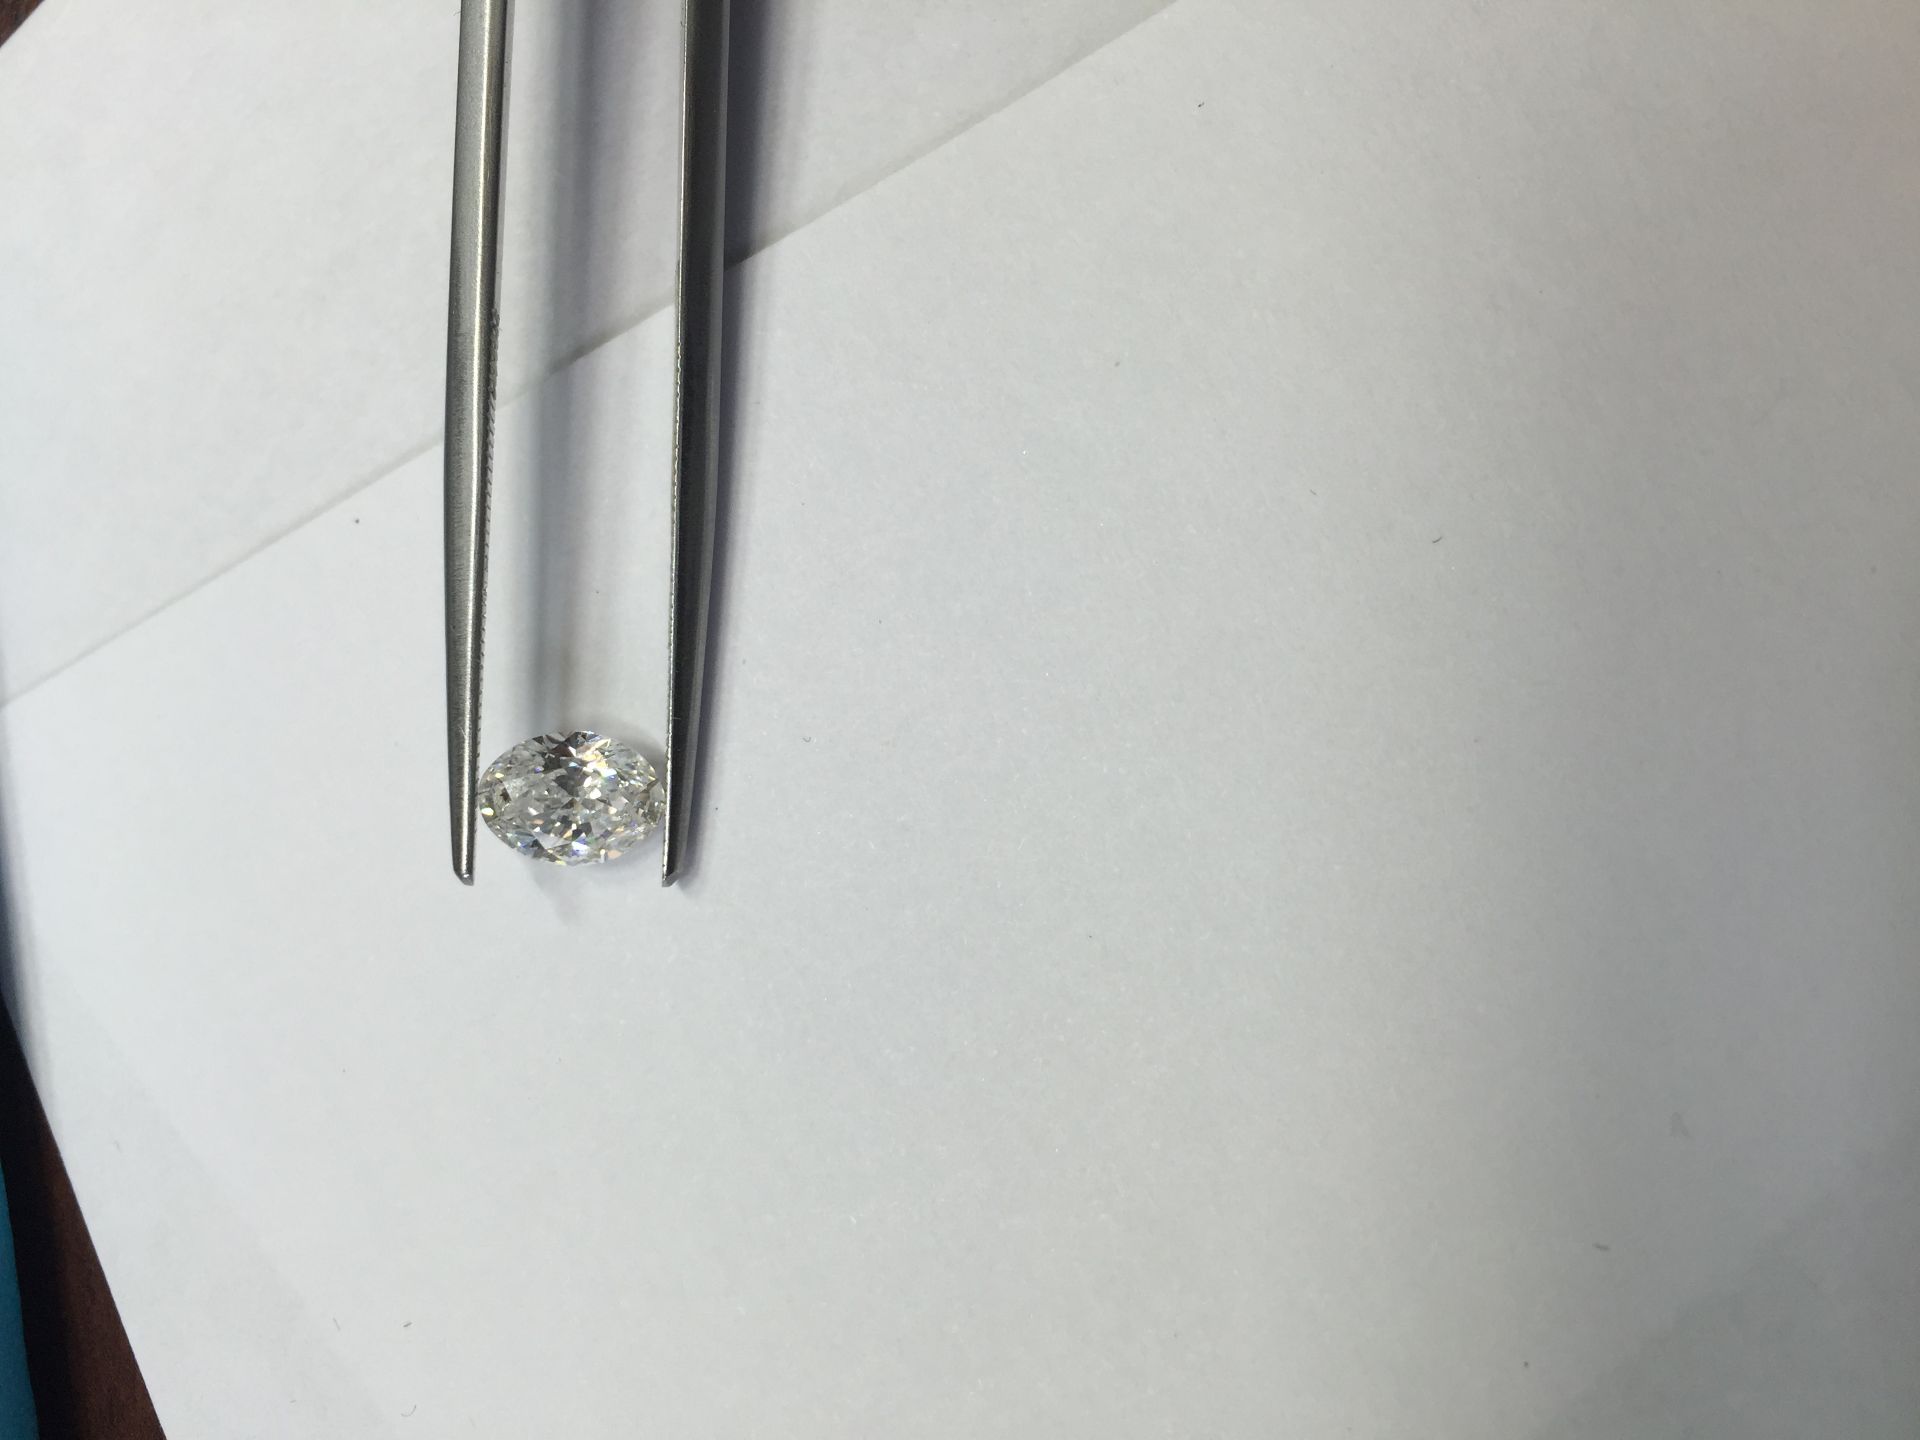 1.00ct oval cut diamond. F colour, VS2 clarity. GIA certification Ð 6202338127. 7.32 x 5.47 x 3. - Image 3 of 4